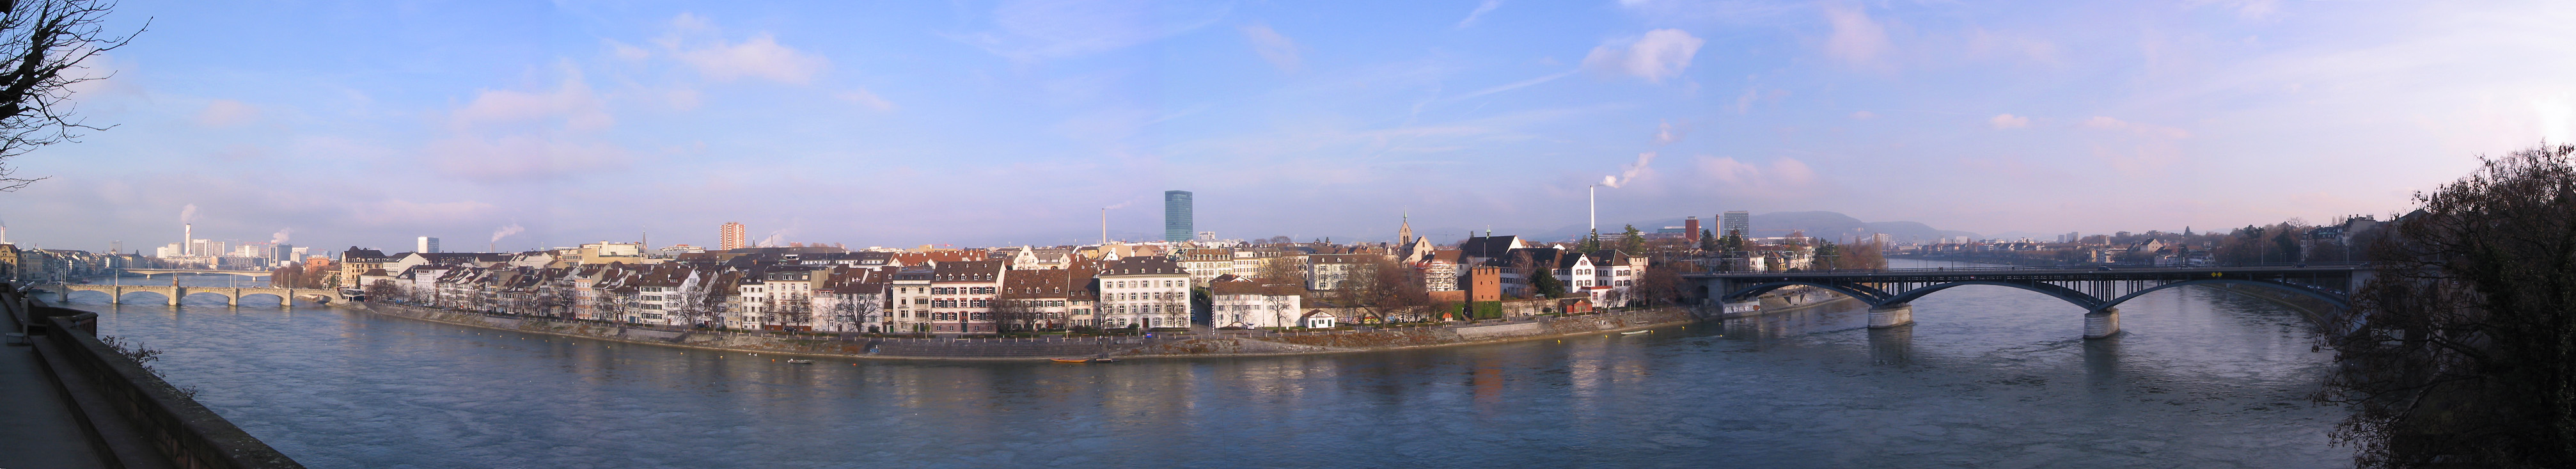 Basel Panorama with Rhine River (0.7MB)